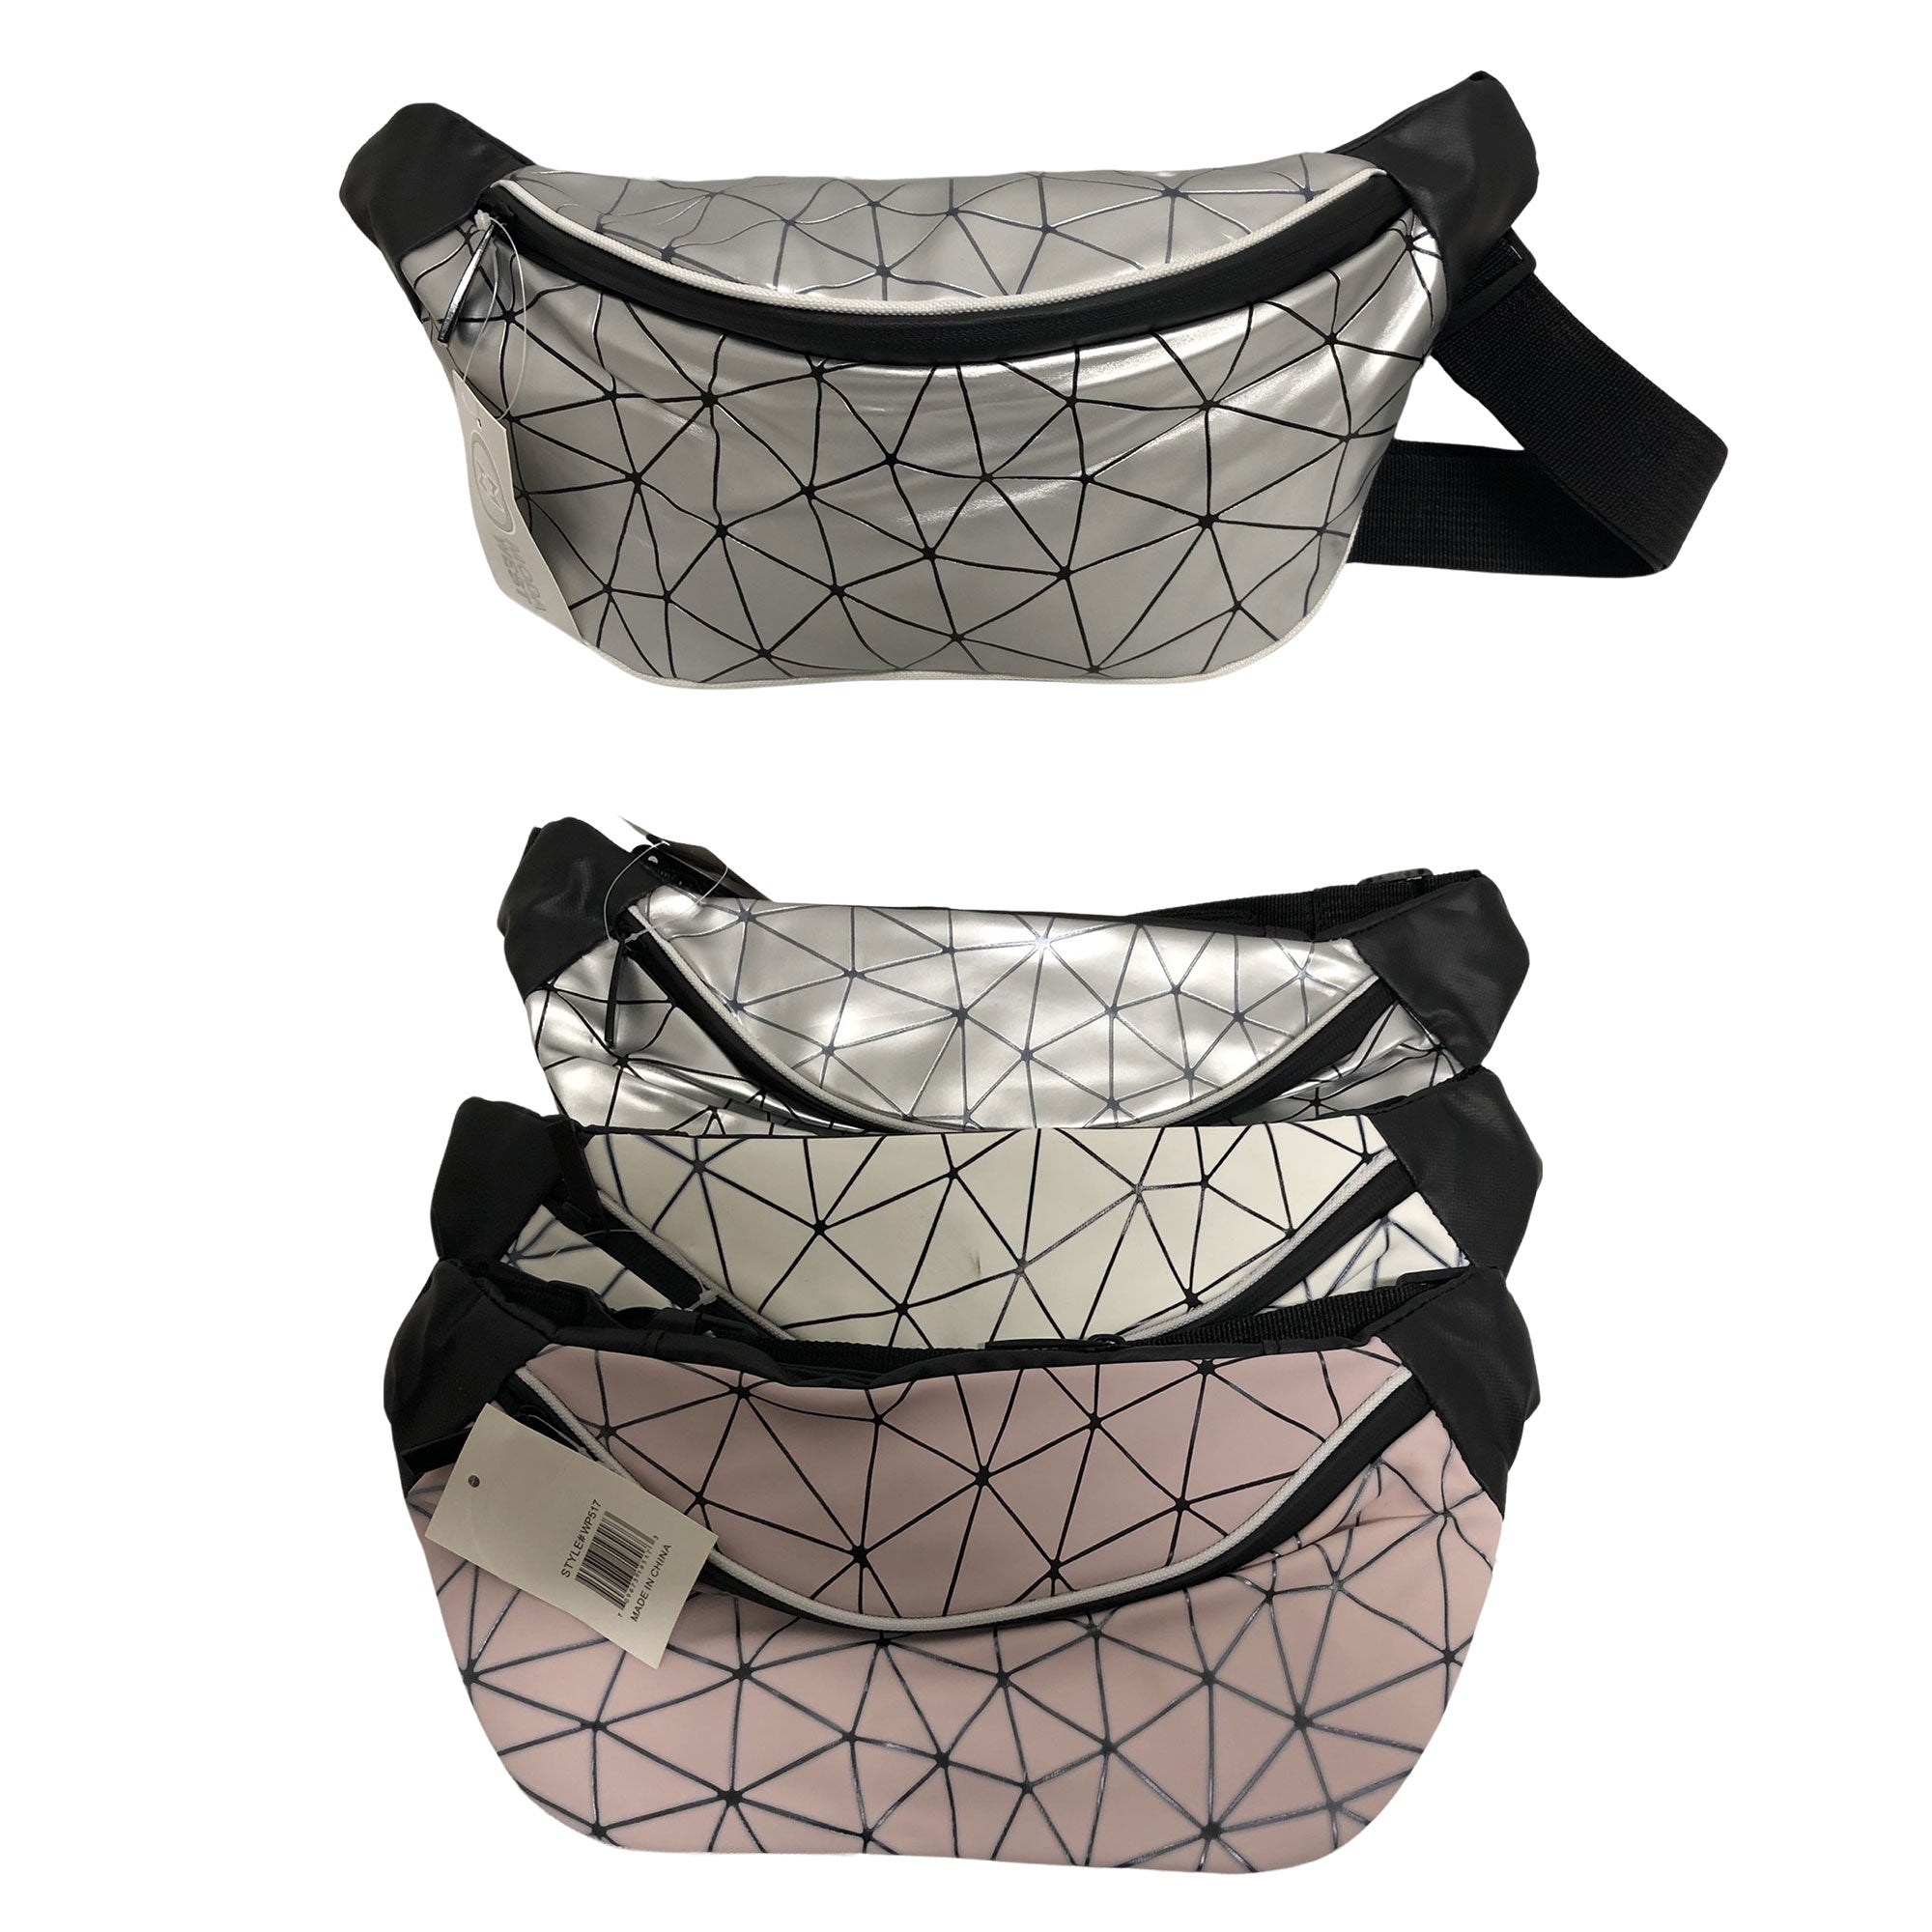 CLEARANCE FANNY PACKS (CASE OF 48 - $2.00 / PIECE) - Wholesale Fanny Bags in Diamond Design SKU: WP517-ASST-48